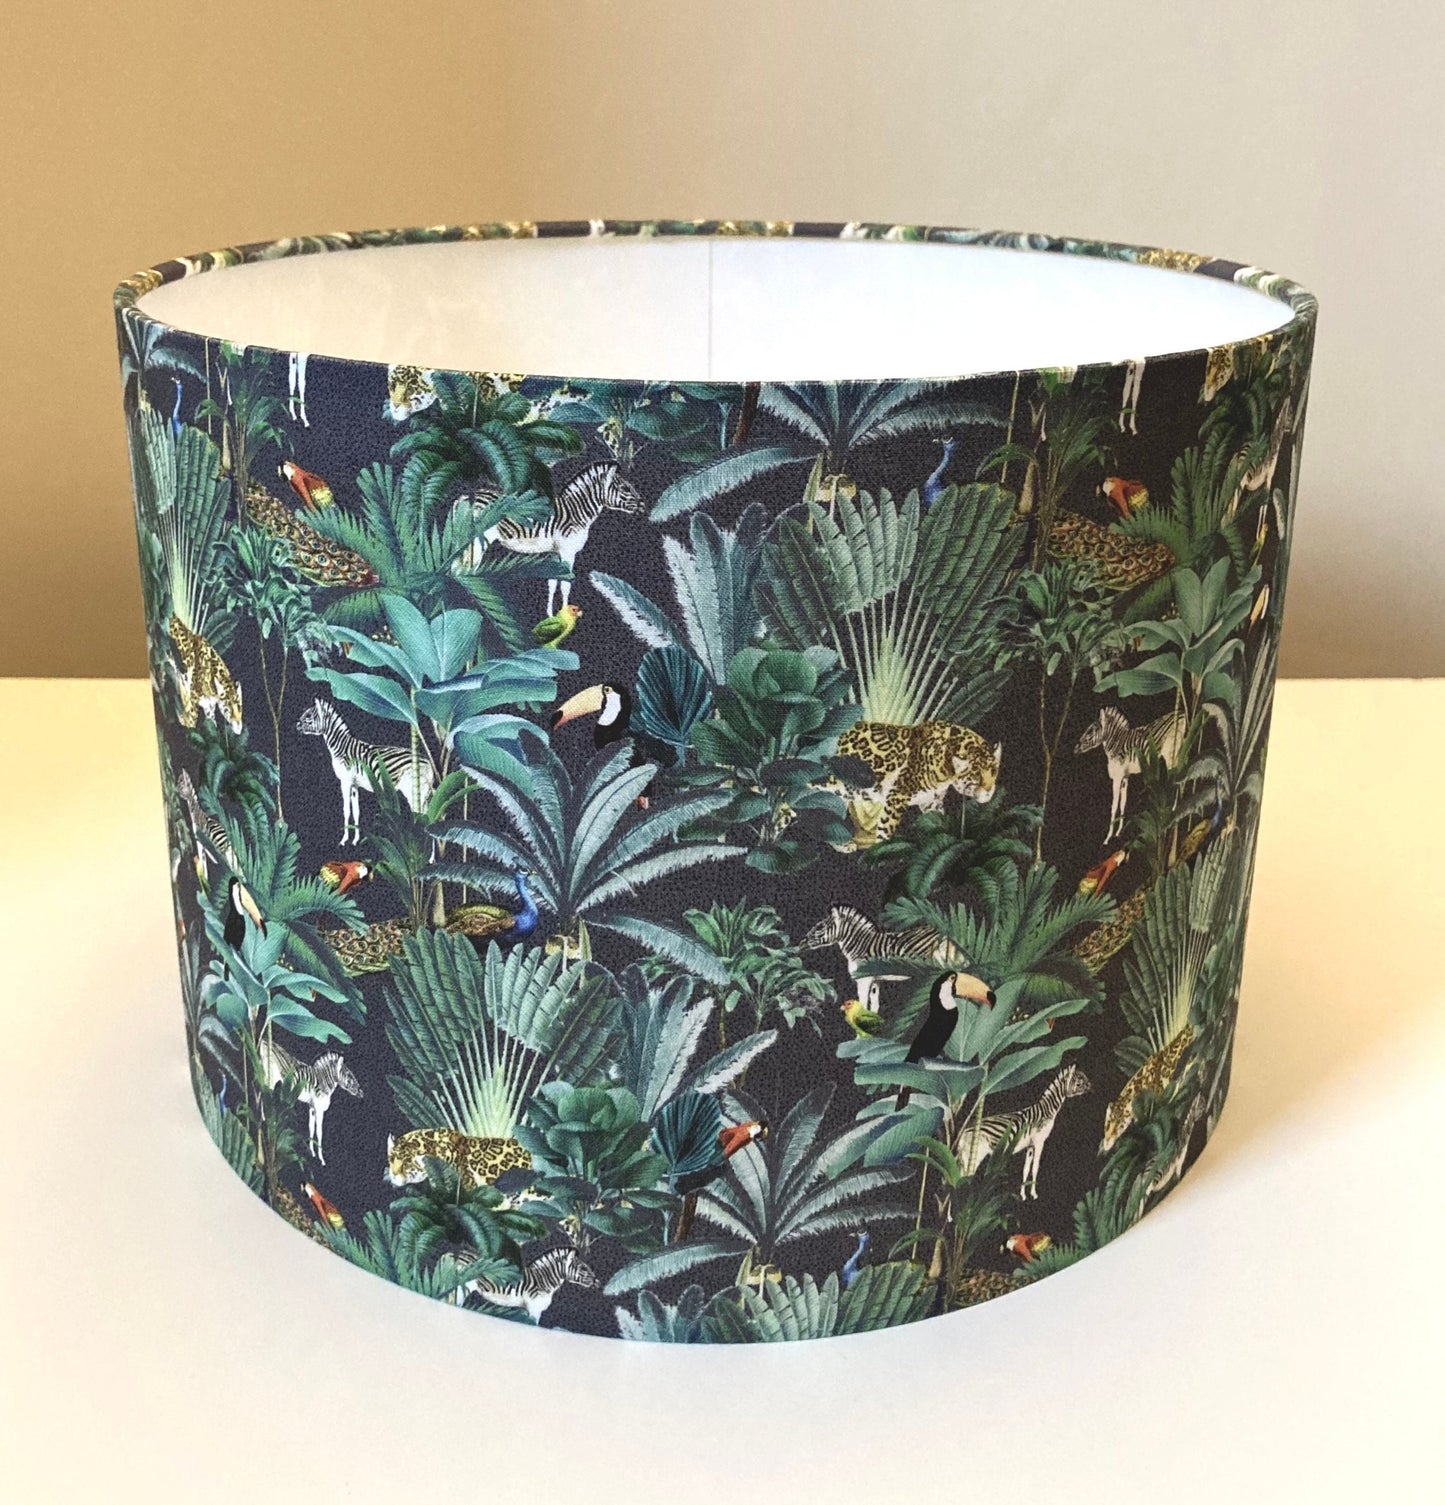 Tropical Drum Lampshade  - Jungle Scenery Animal Print Fabric - Handmade Table or Ceiling Lamp